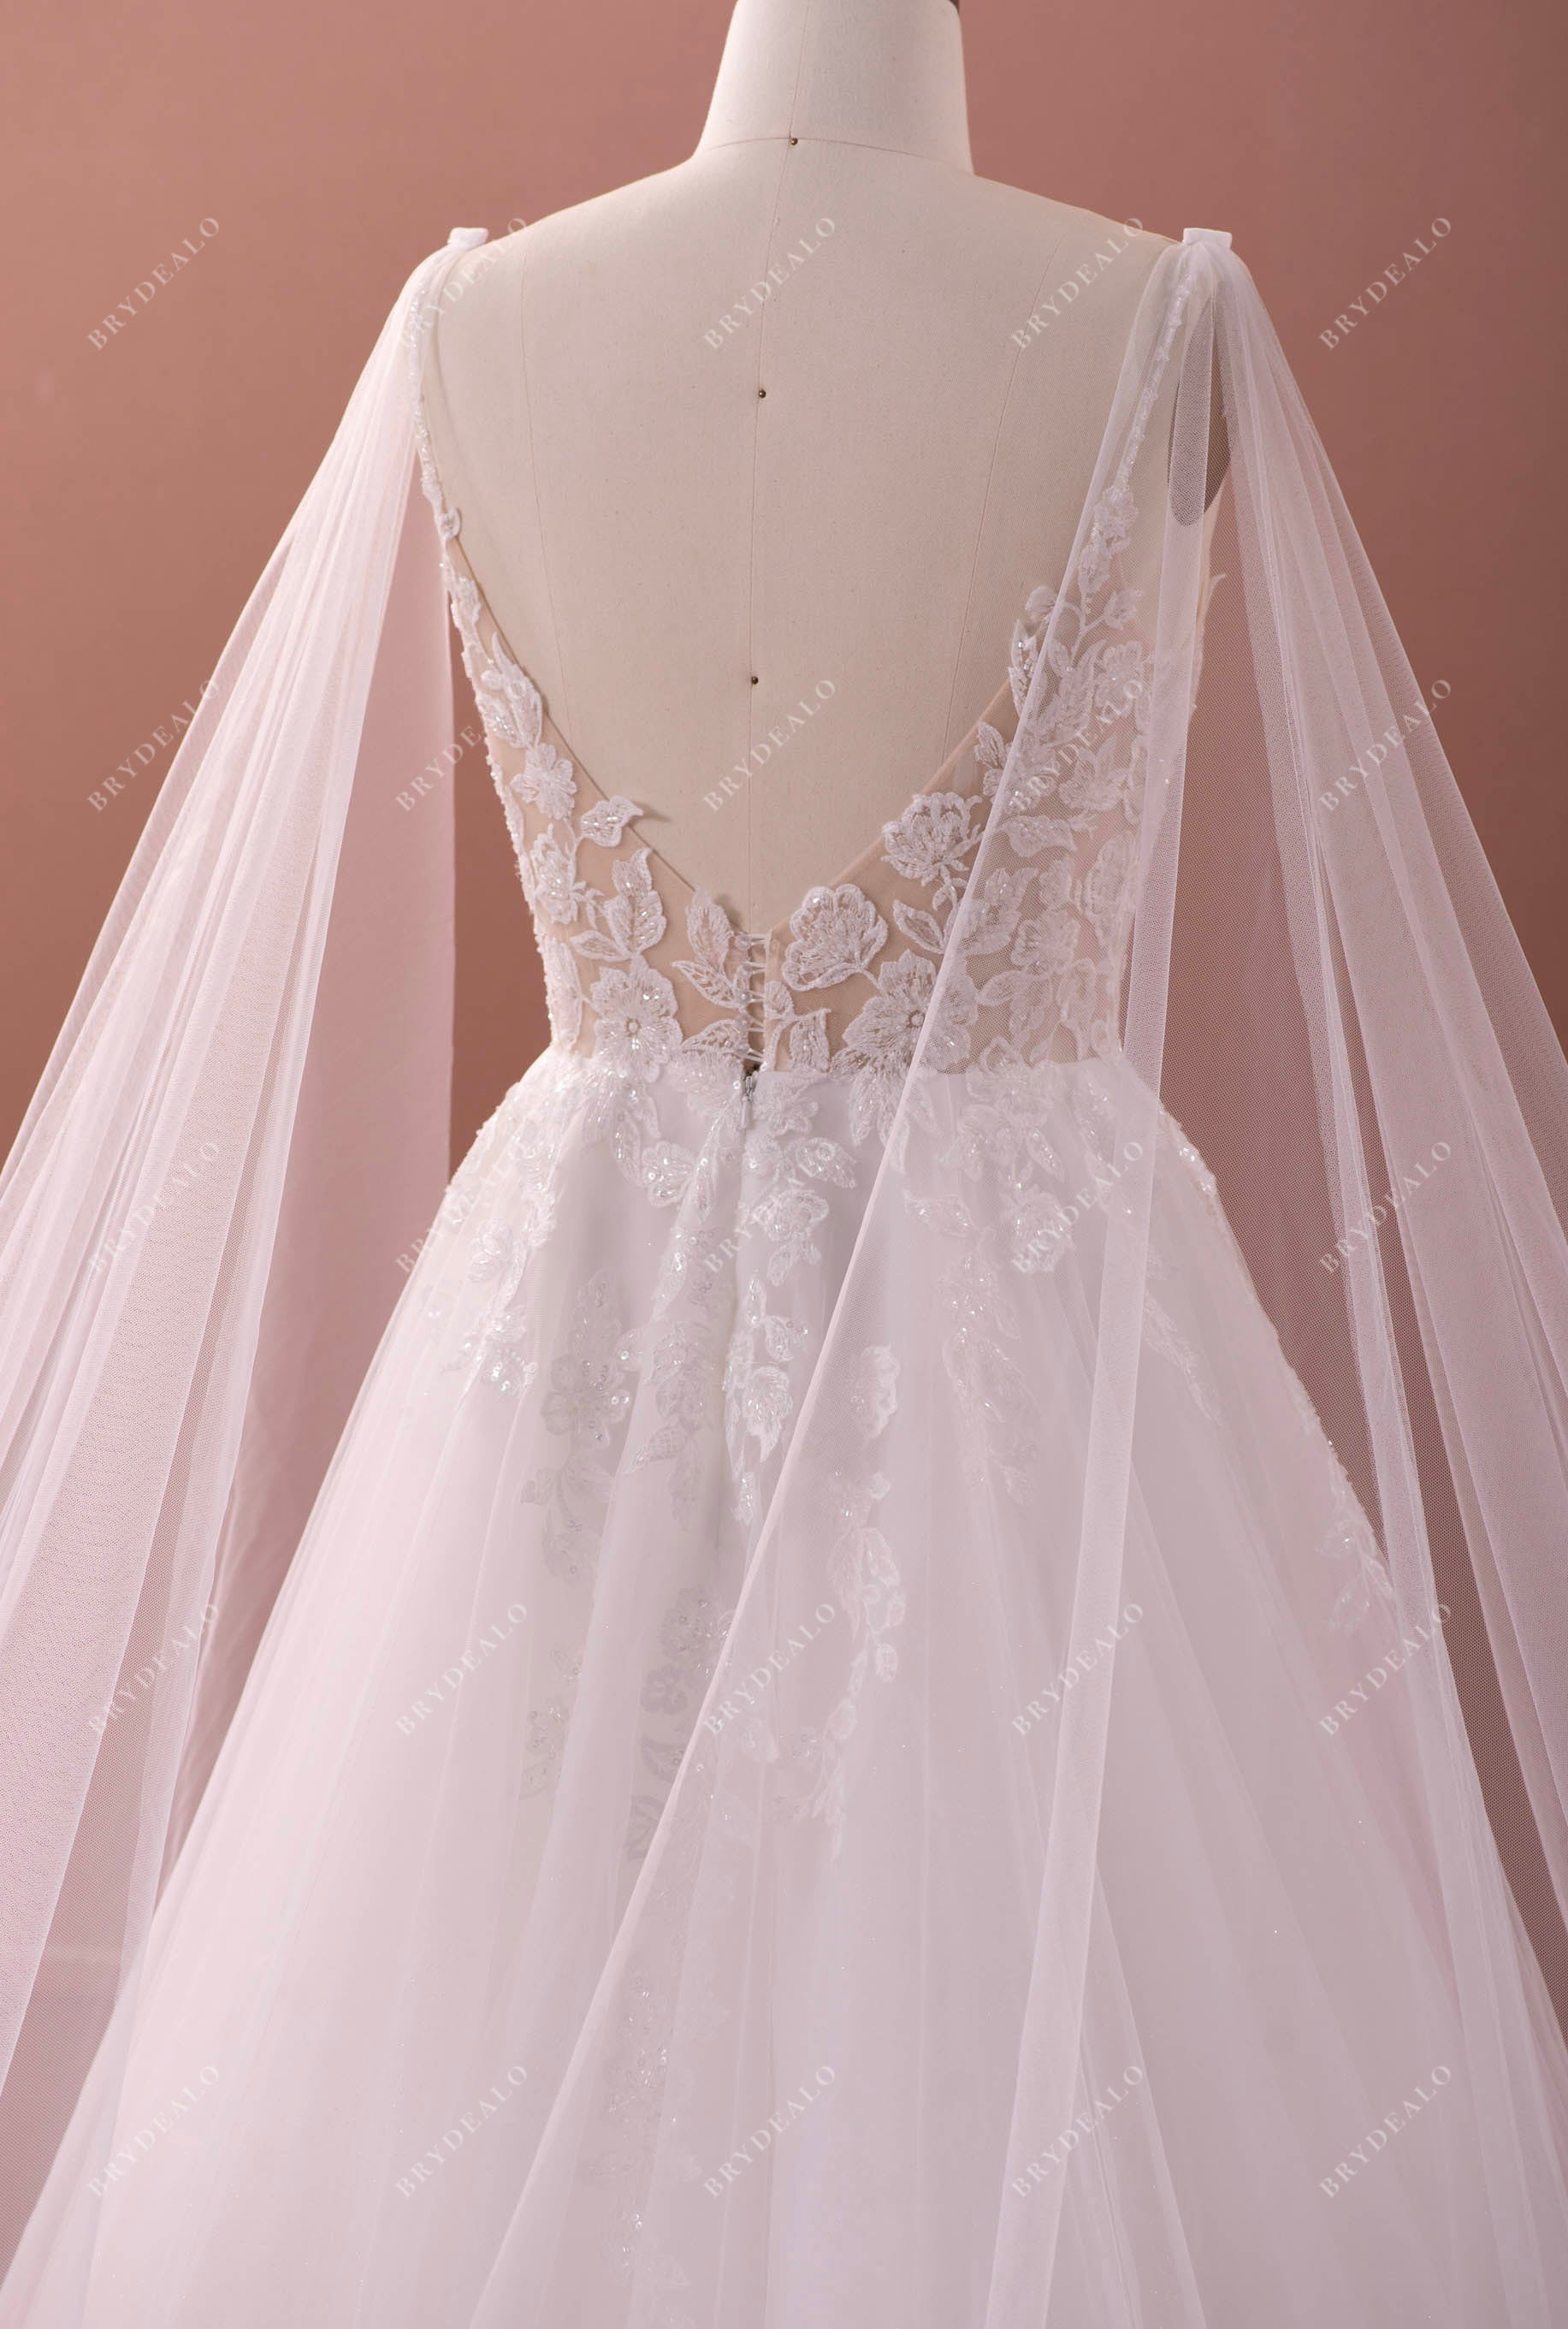 shoulder veil lace modern bridal gown